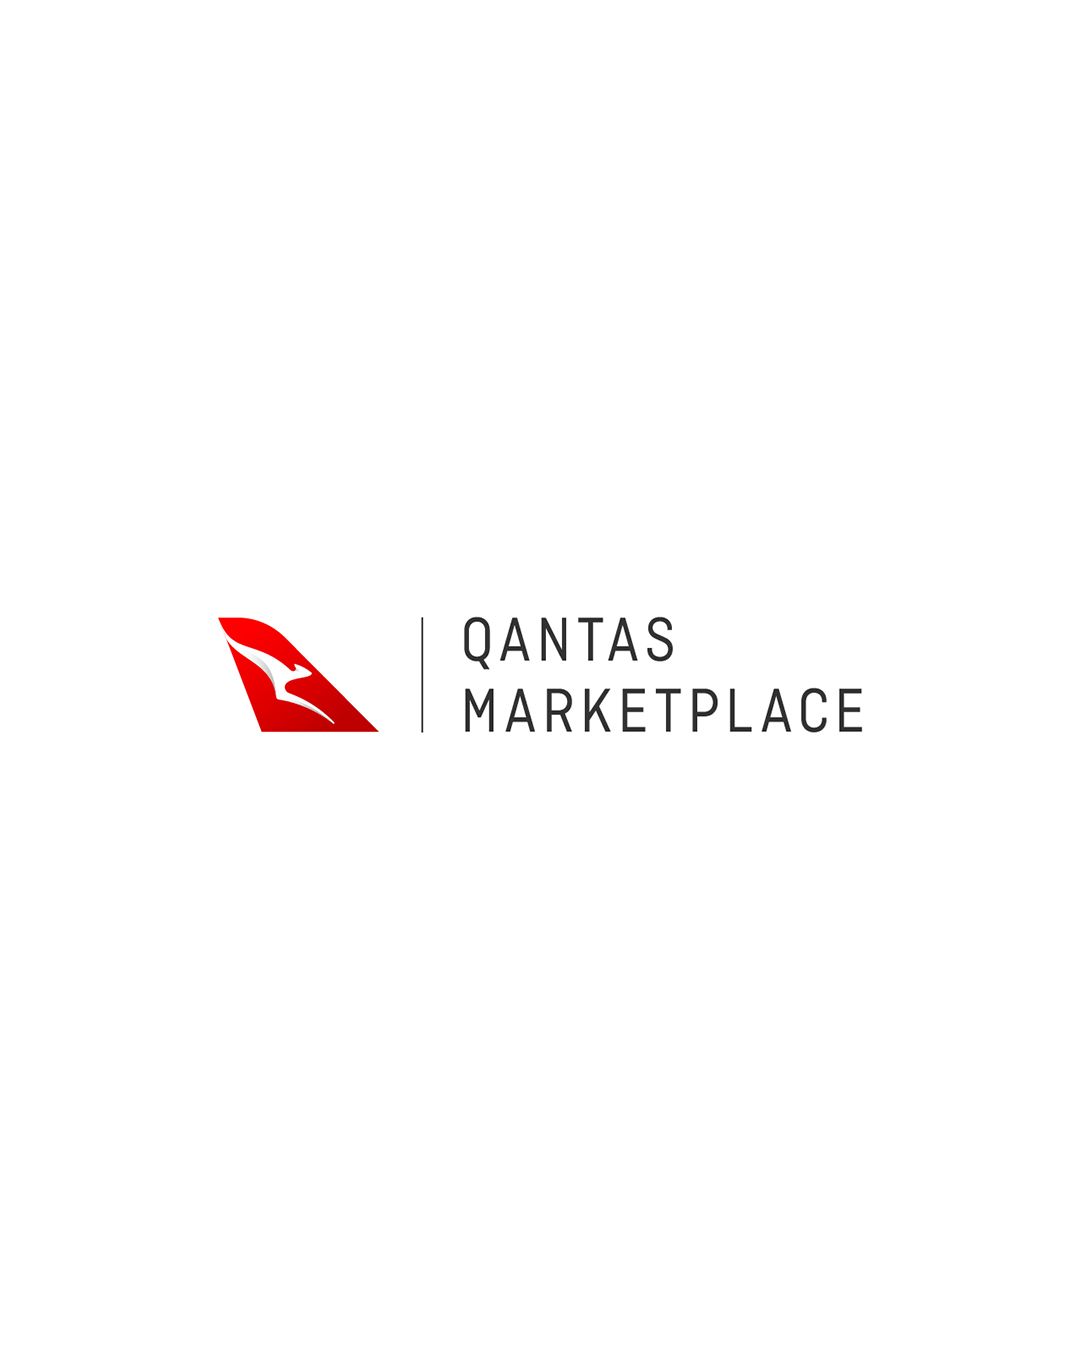 Qantas Marketplace Logo